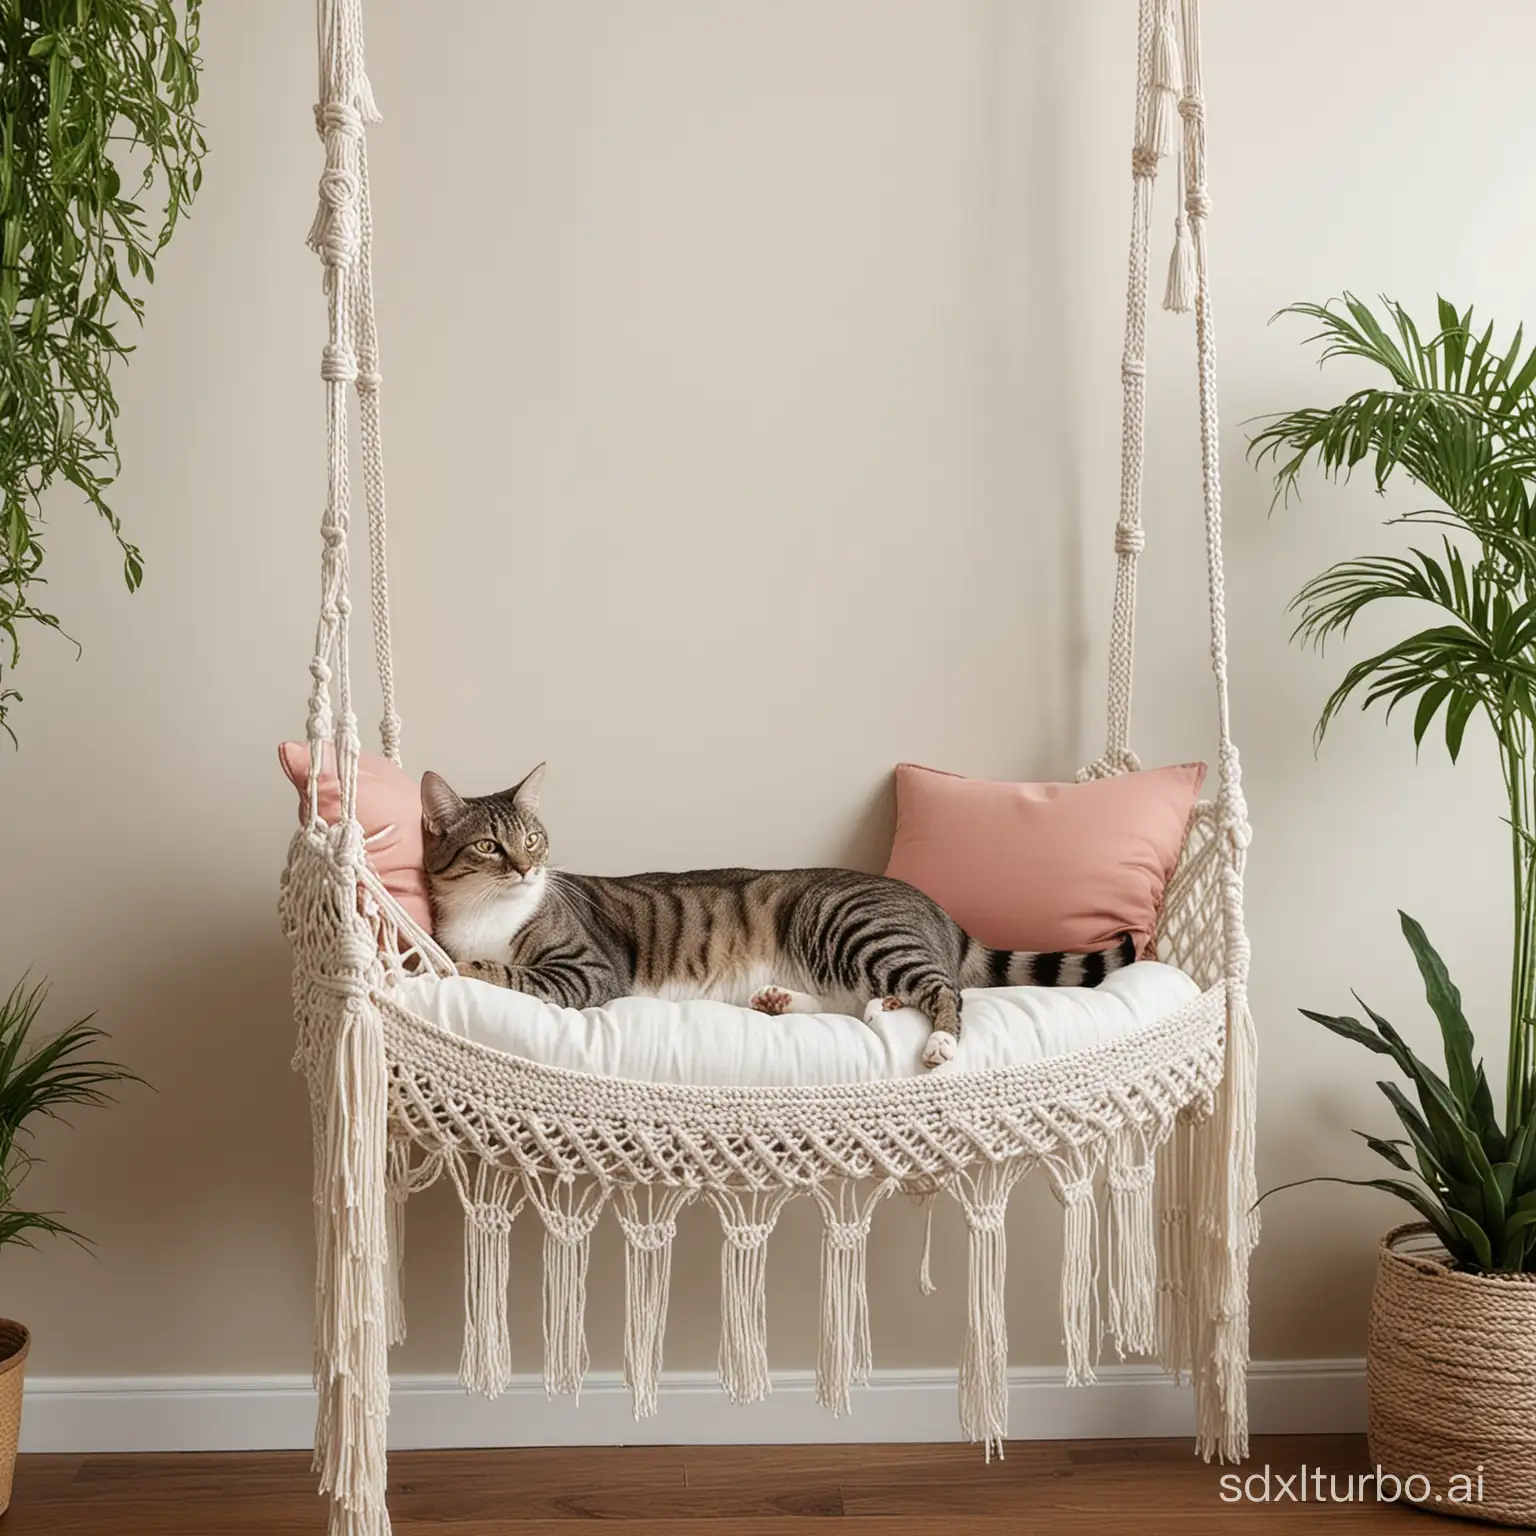 Macrame-Boho-Hammock-with-Relaxing-Cat